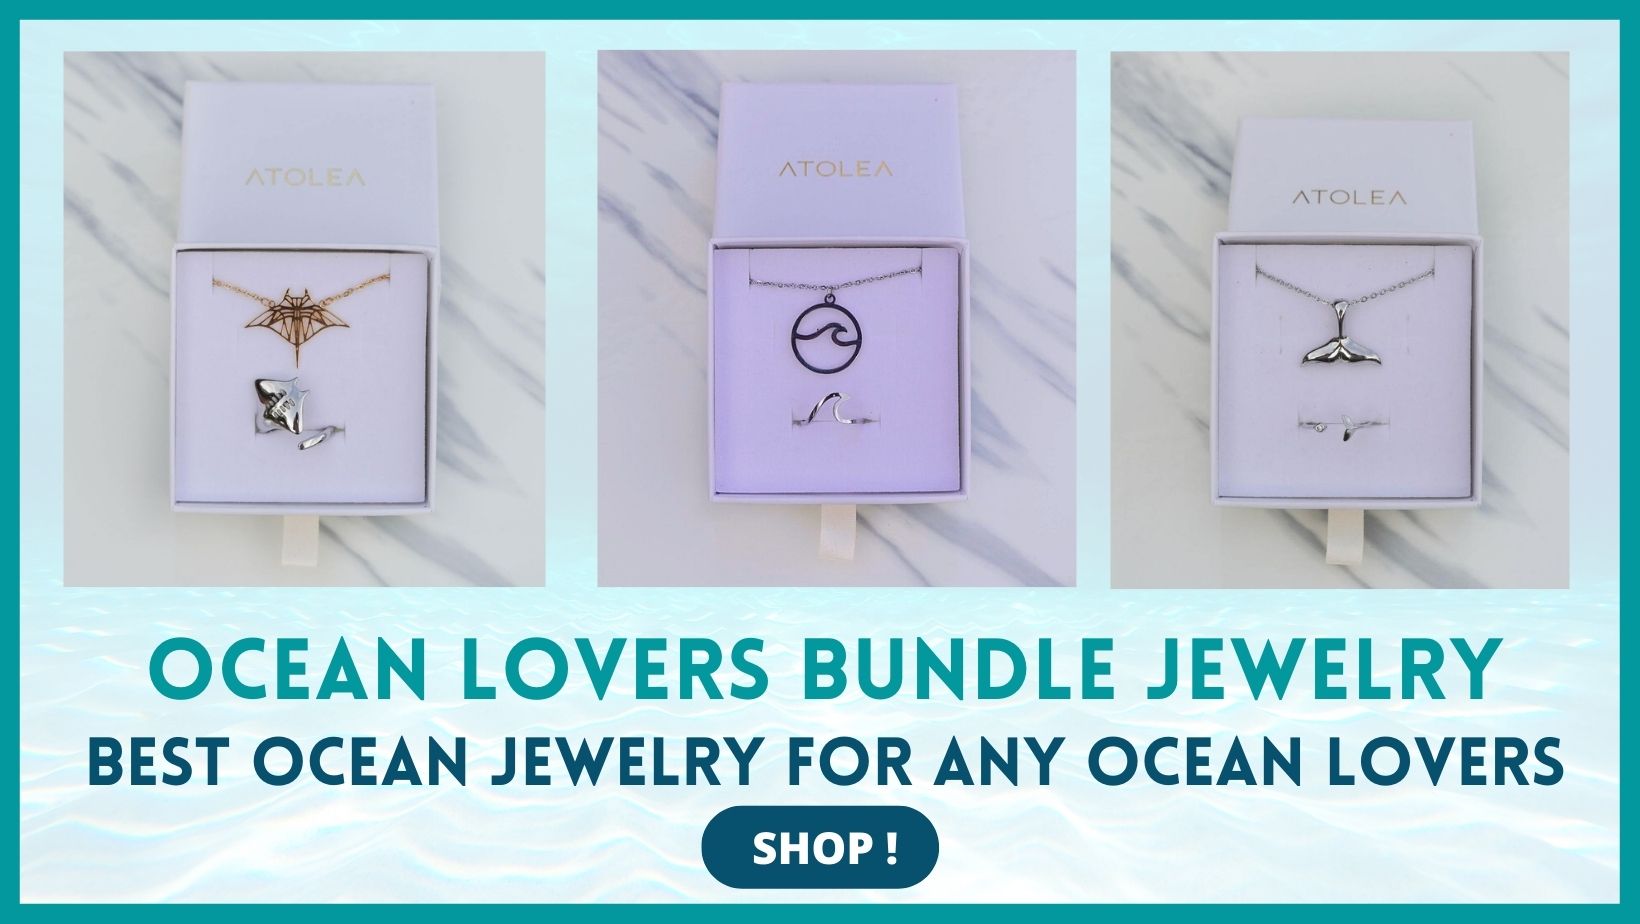 Perfect ocean gift ideas